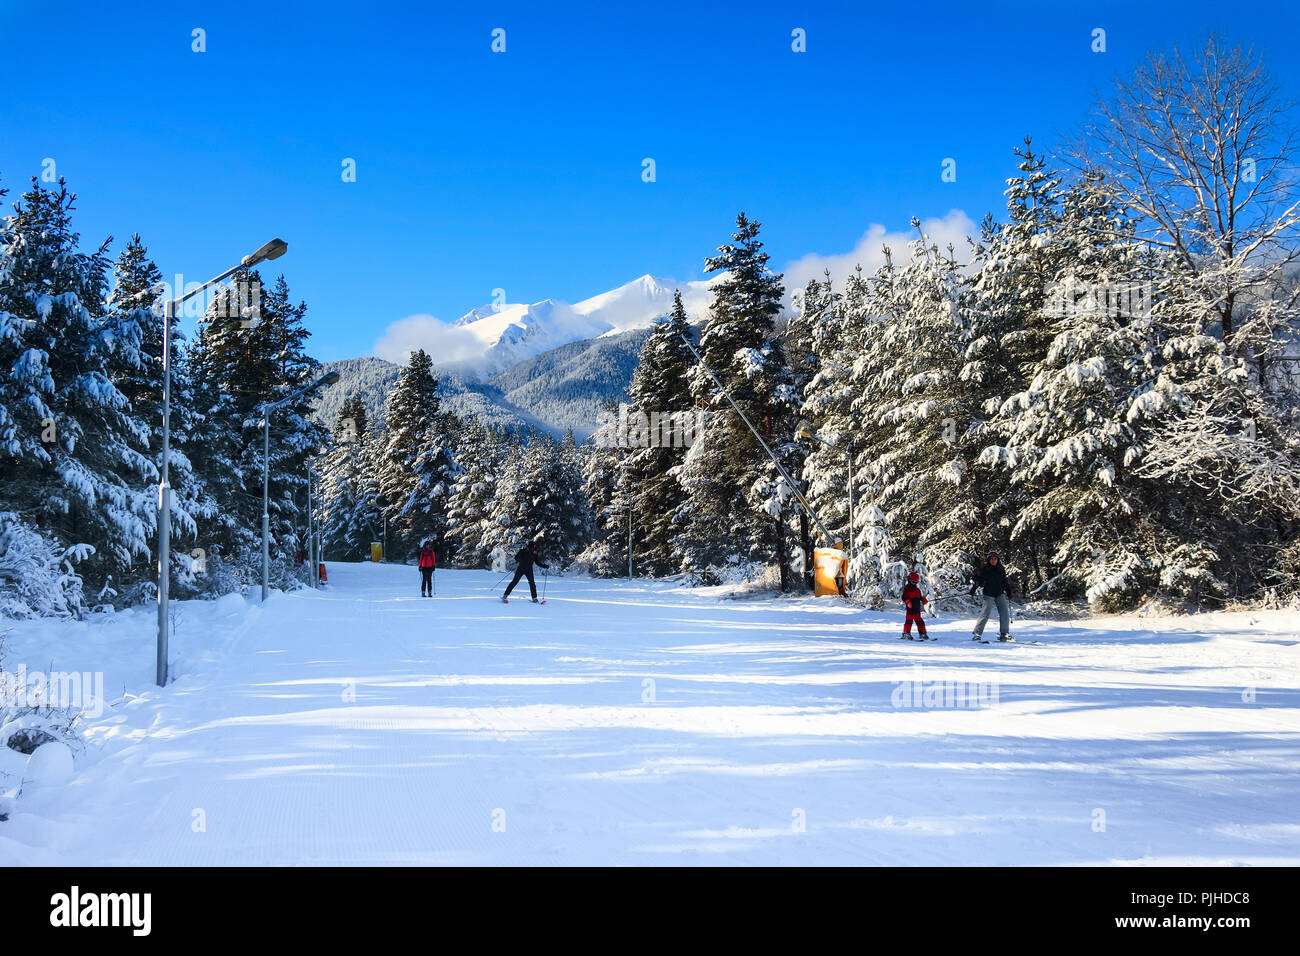 Bansko, Bulgarien - Januar 22, 2018: Winter Skigebiet Bansko mit Skipiste, Skifahrer und Berge Stockfoto